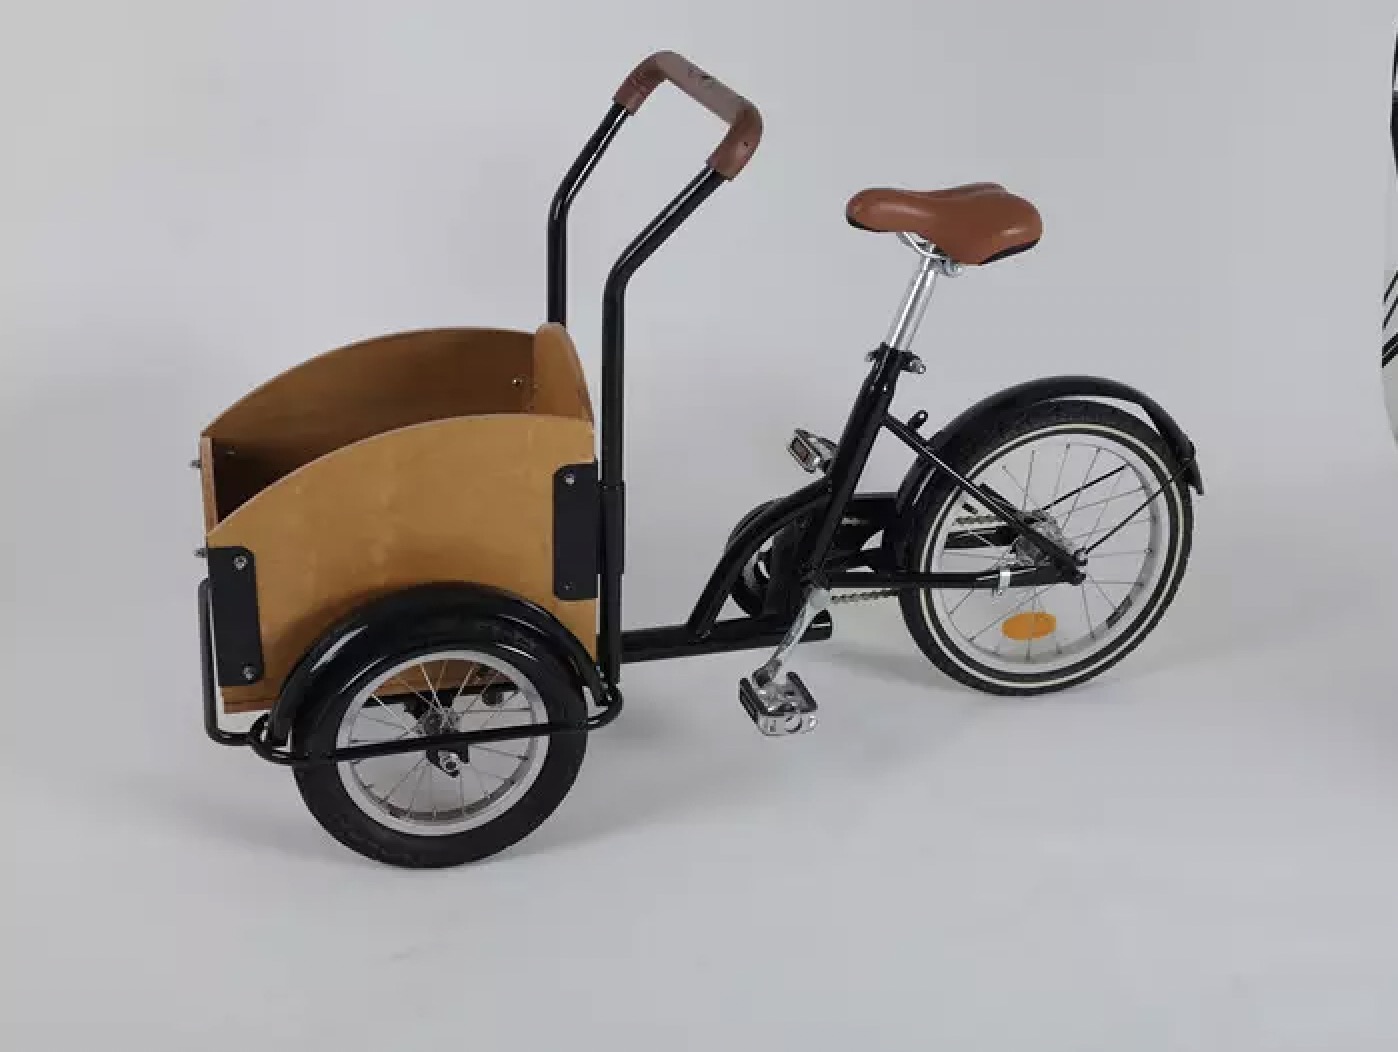 europa lager børnecykel 3 hjul ladcykel til børn legetøj trike balancecykel